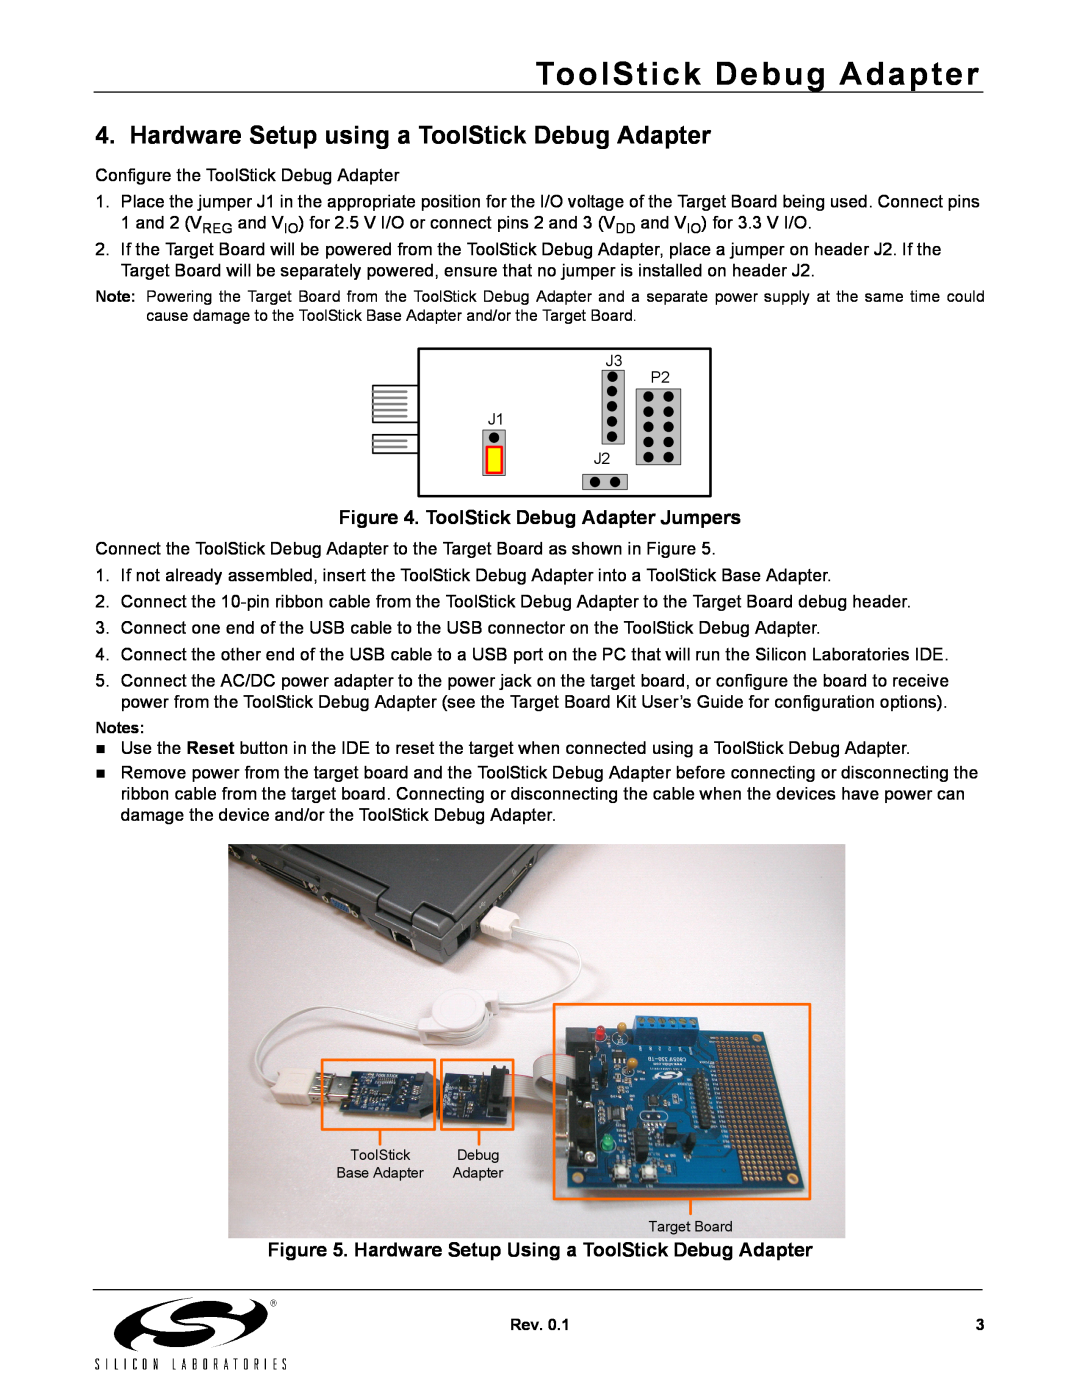 Silicon Laboratories manual Hardware Setup using a ToolStick Debug Adapter, ToolStick Debug Adapter Jumpers 